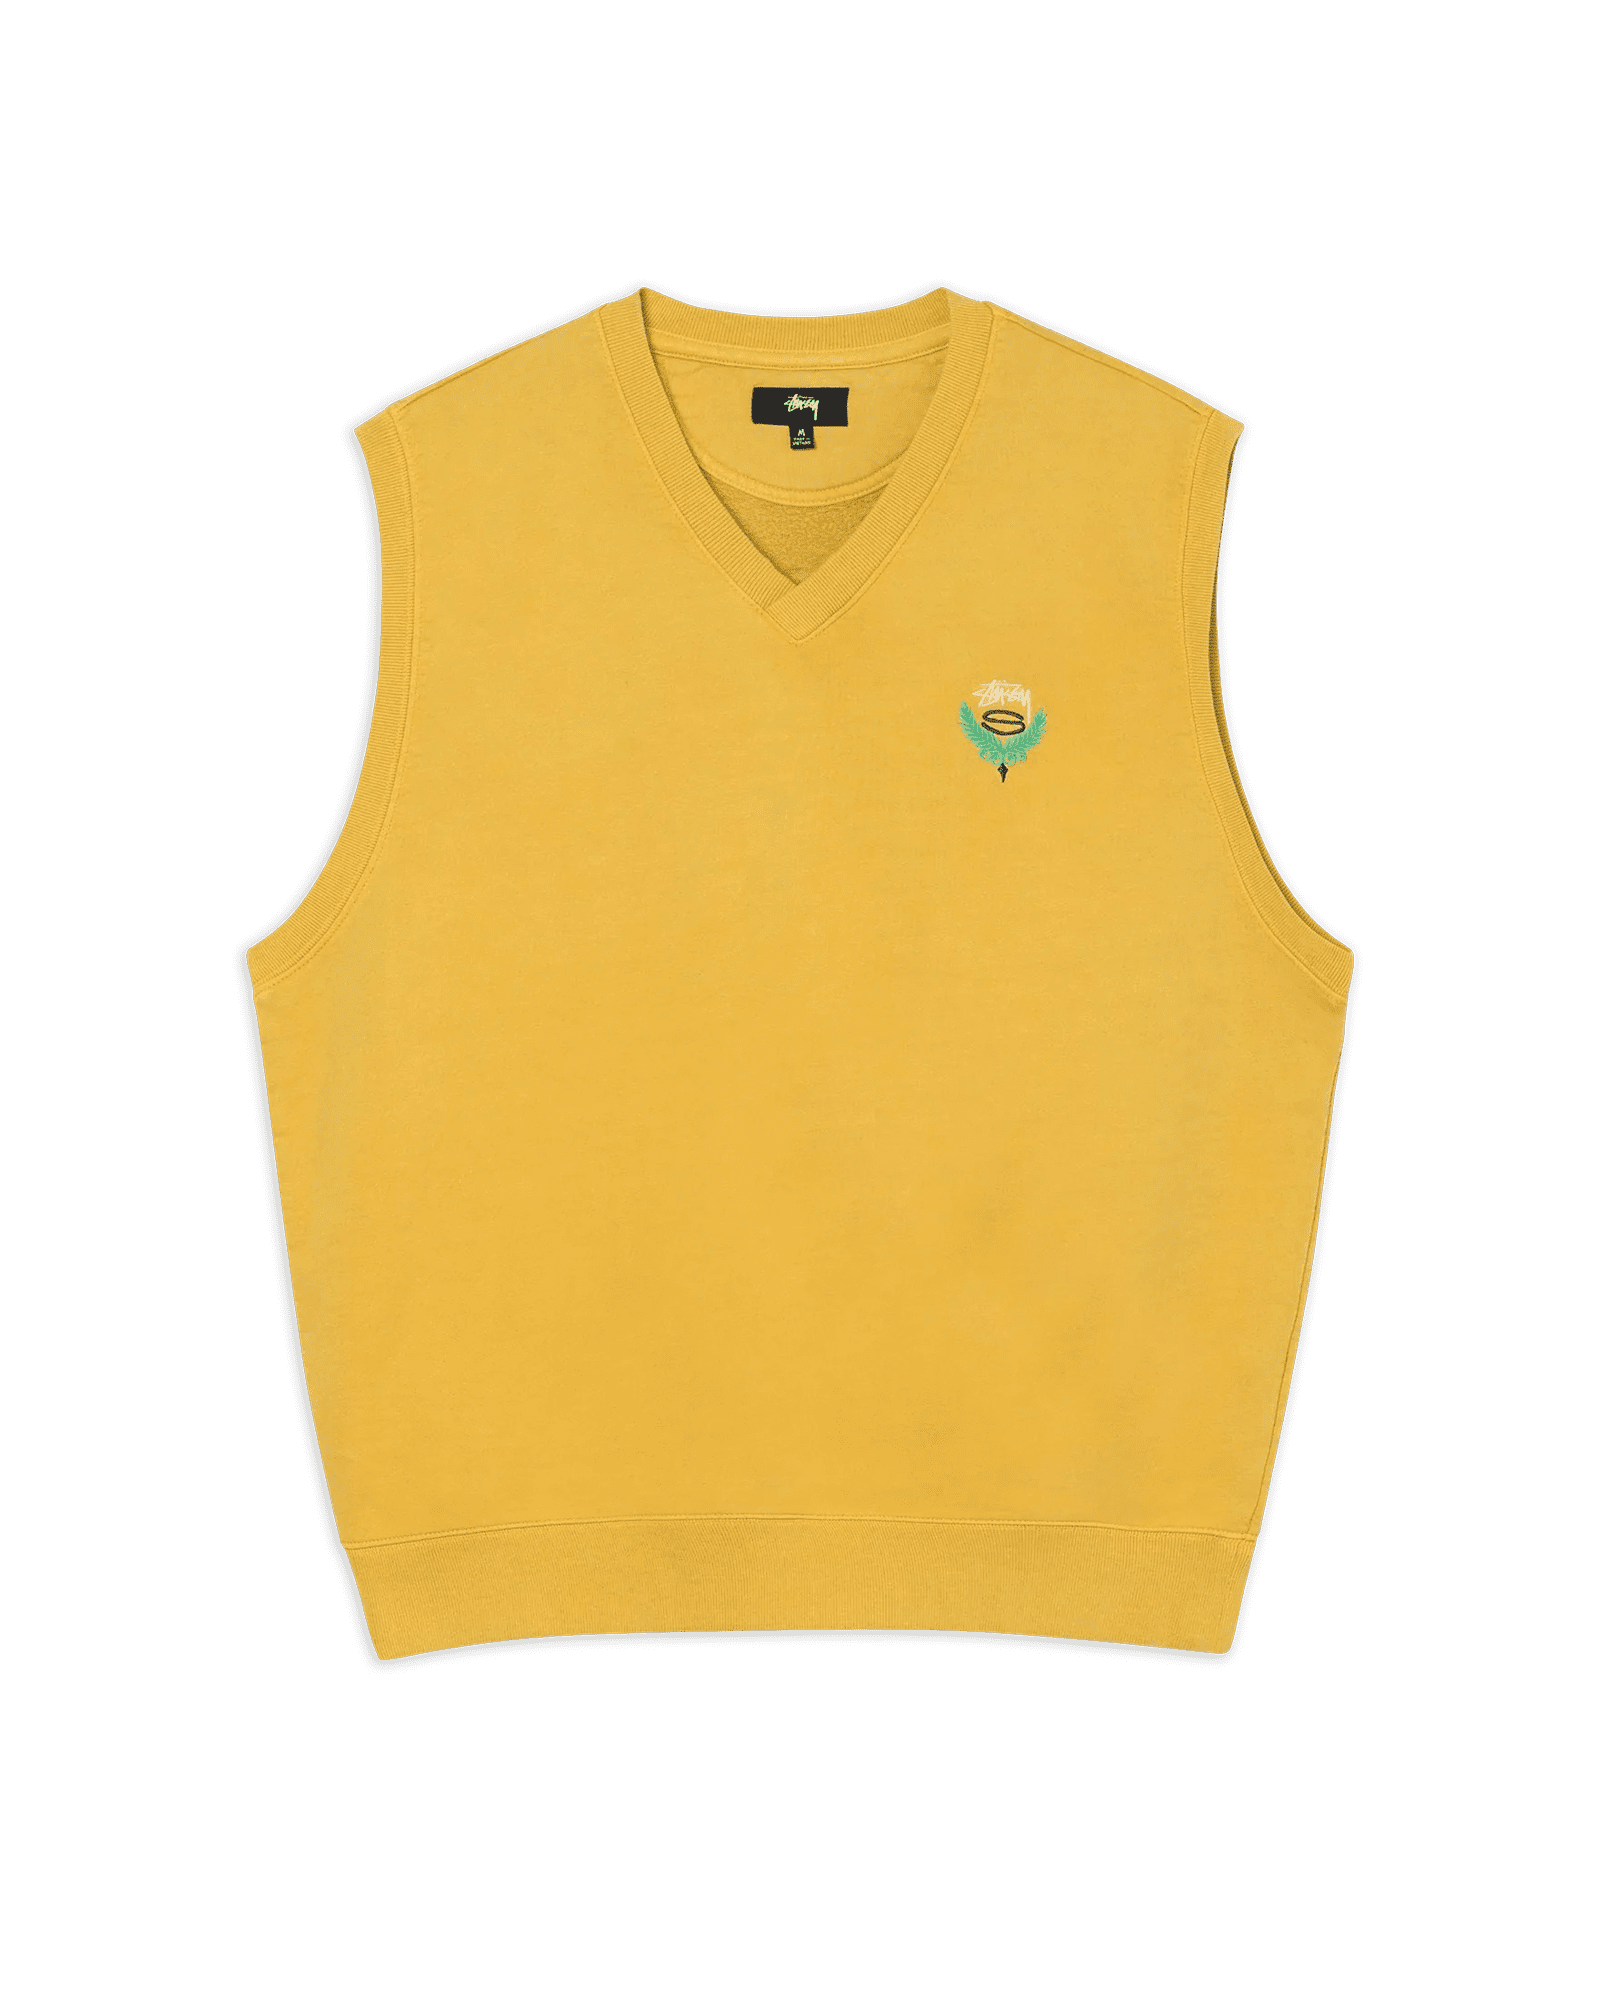 Fleece Vest $36 Stüssy Tops Vest Yellow